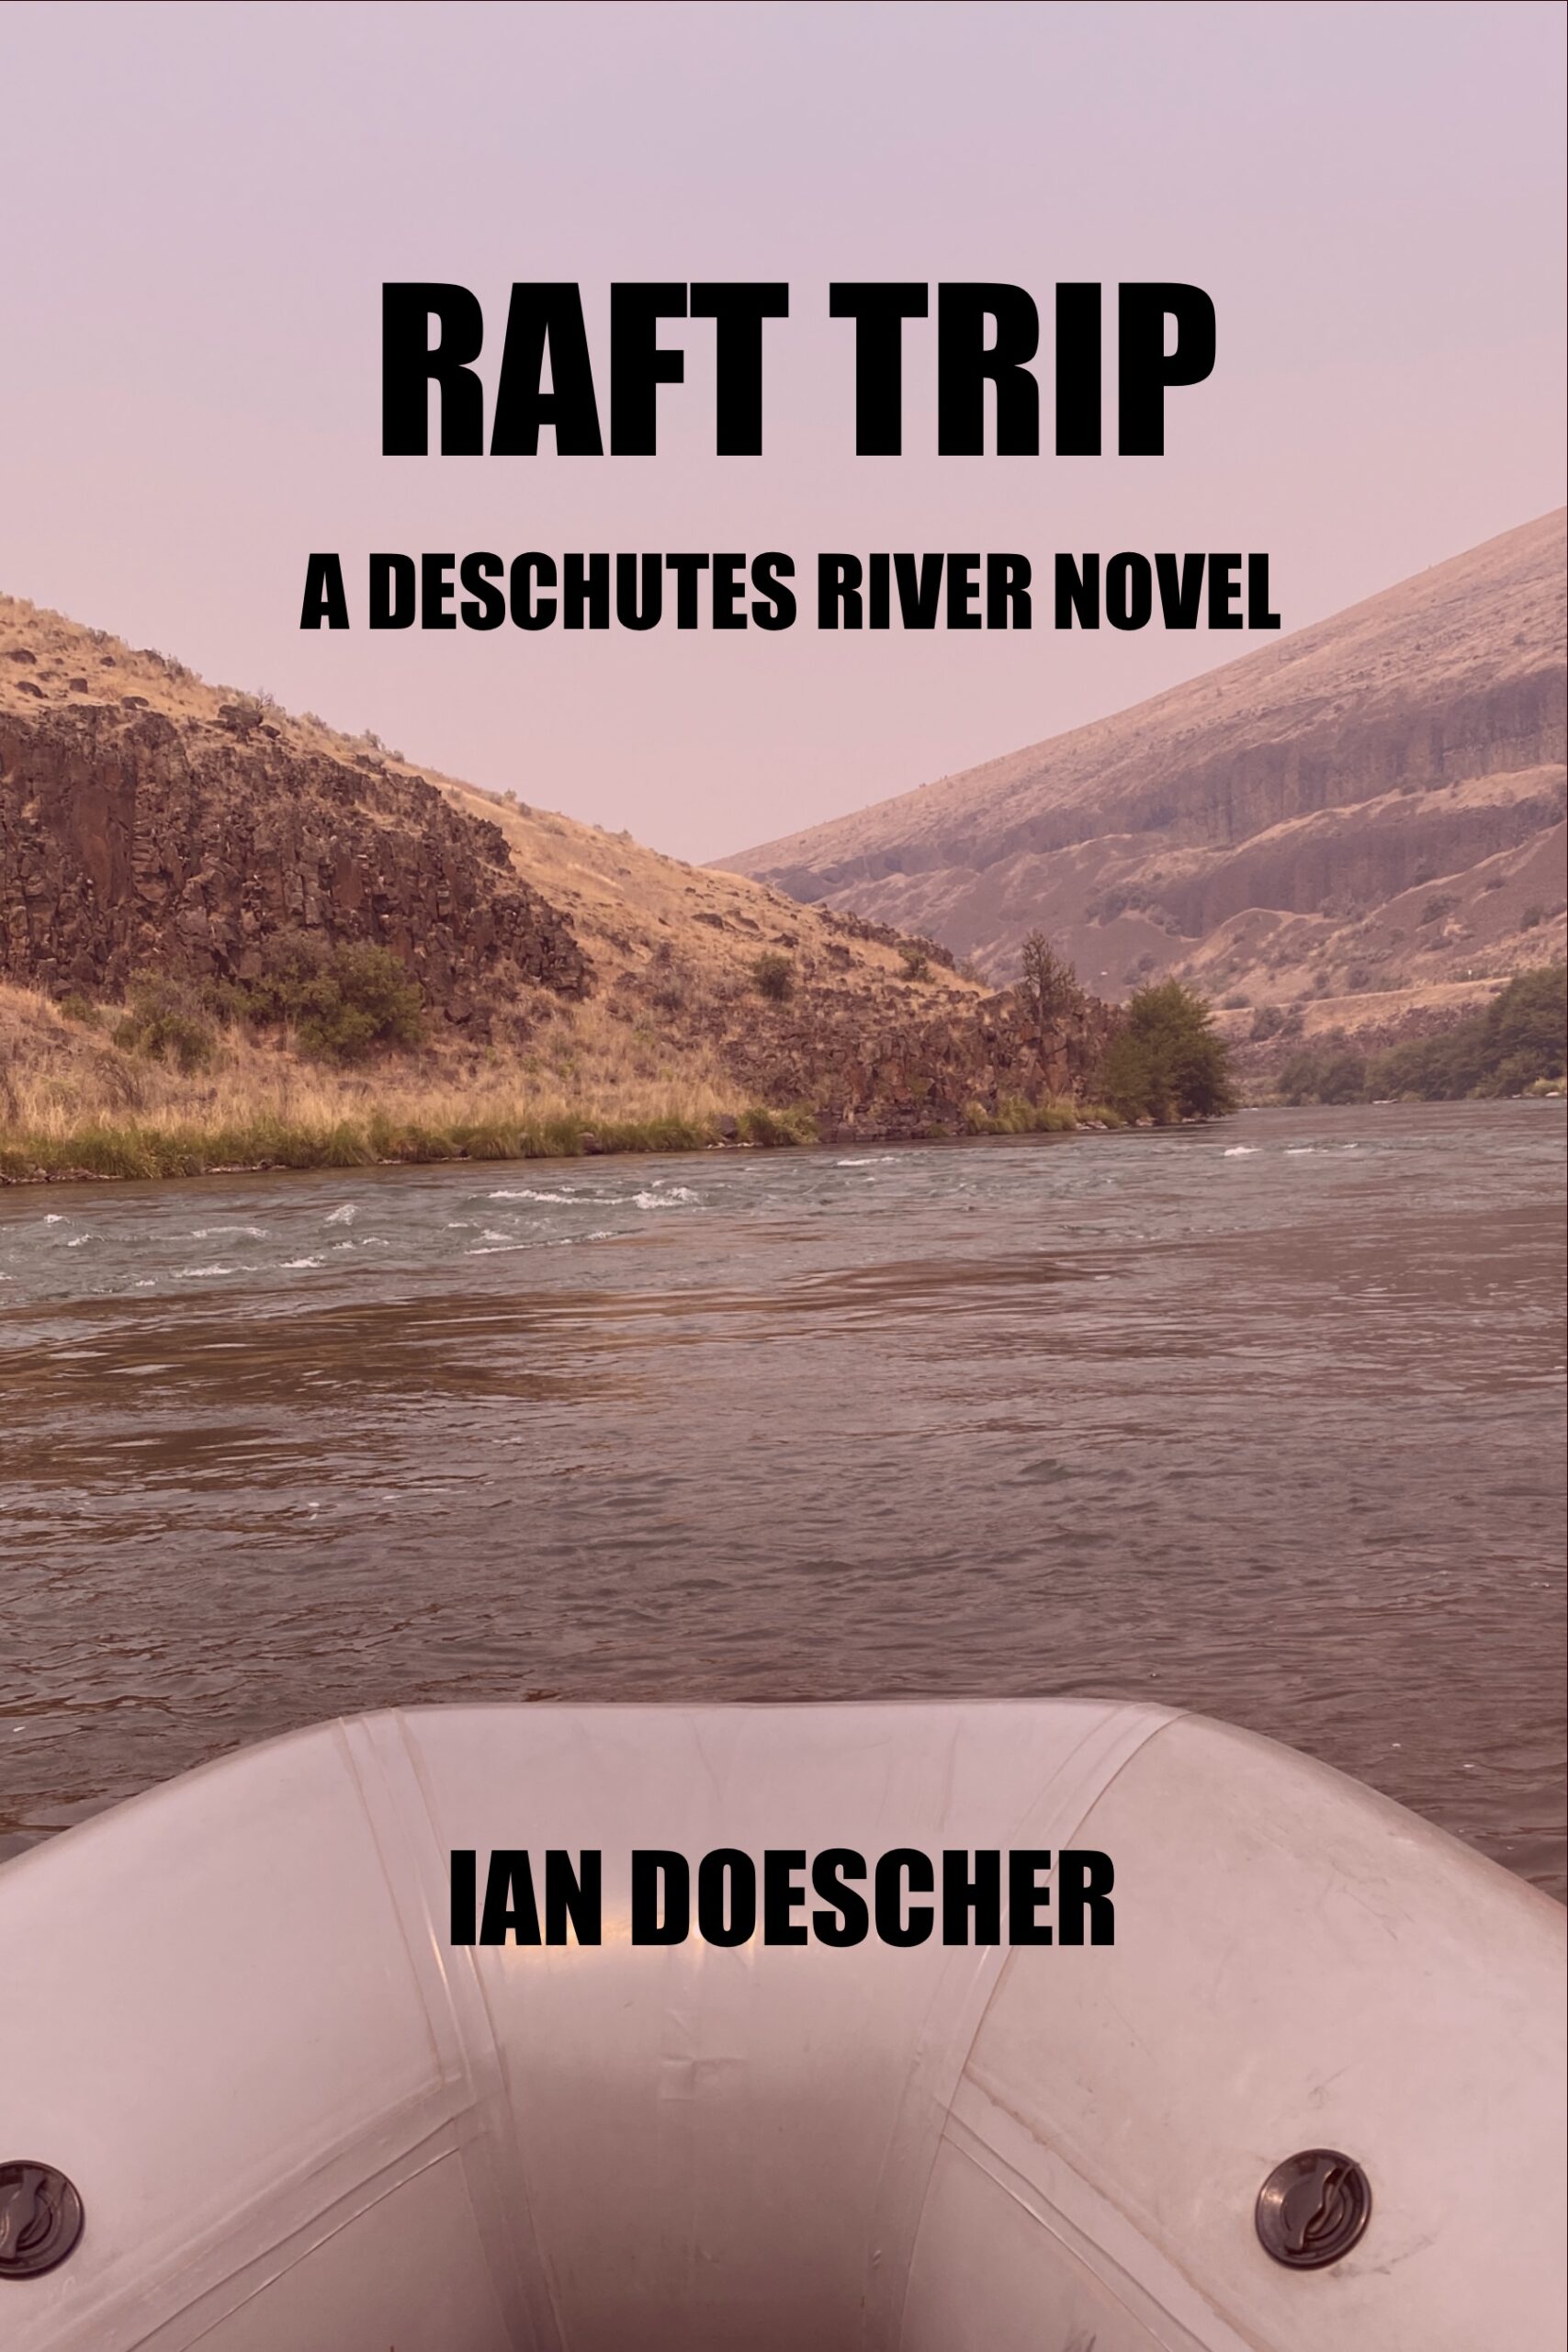 Raft Trip by Ian Doescher